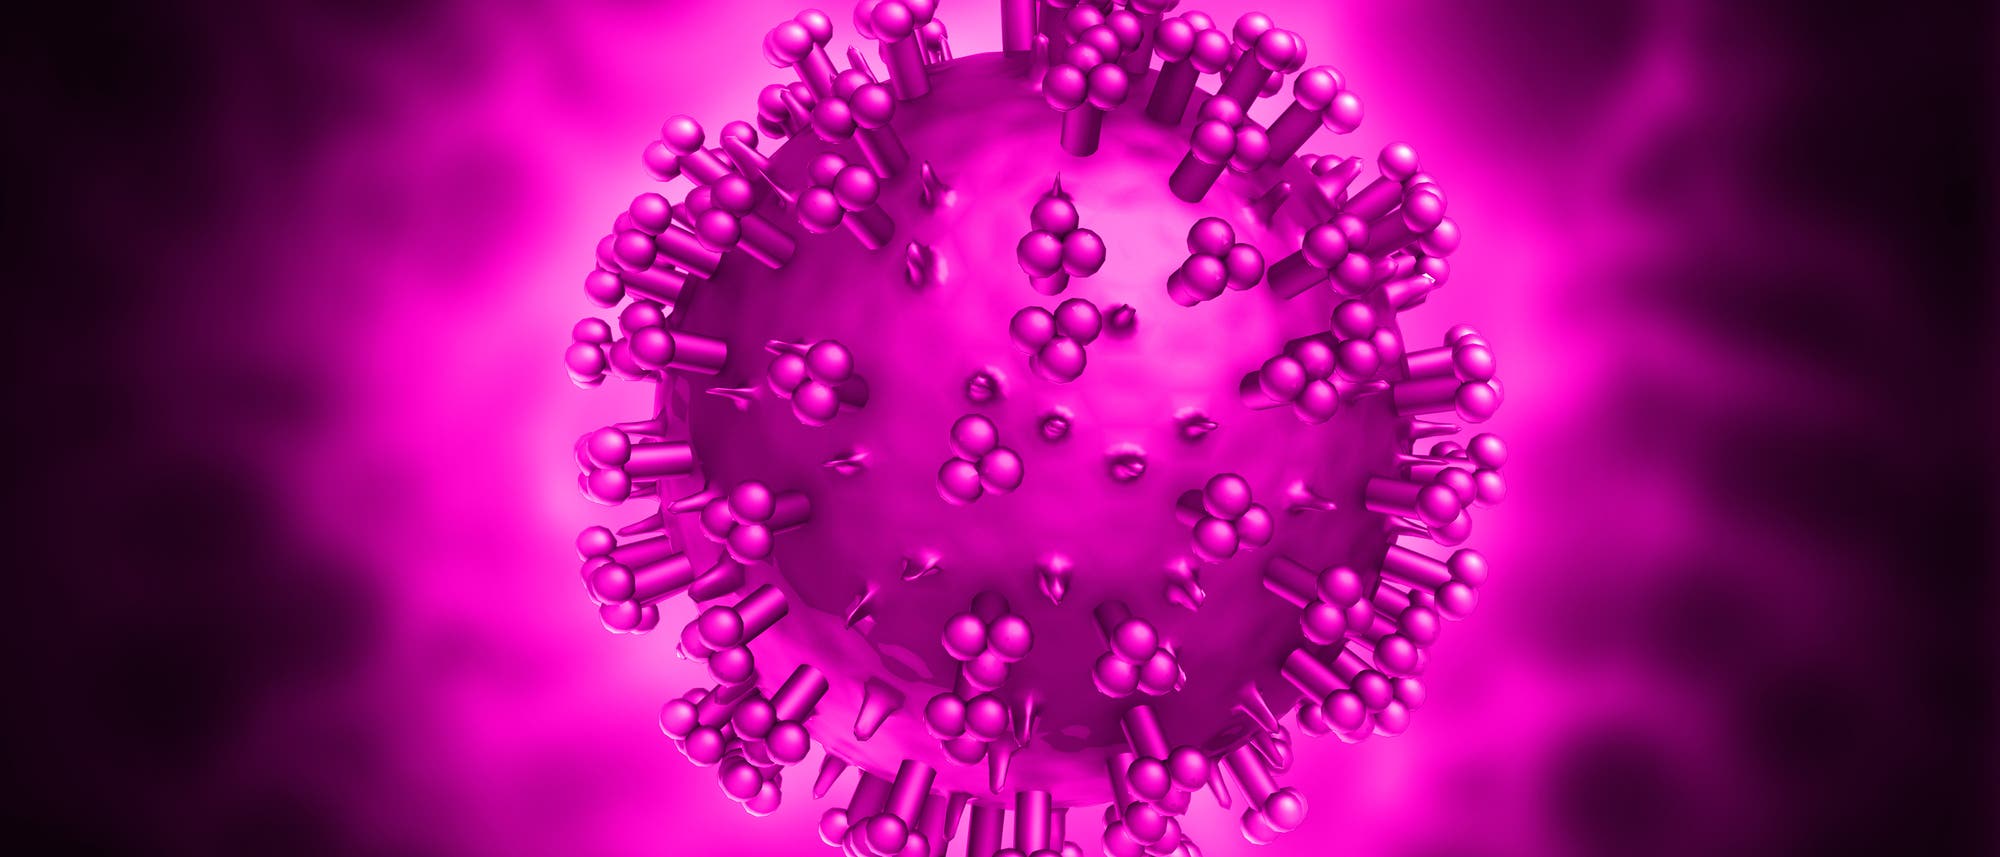 Modell eines Virus (Symbolbild)